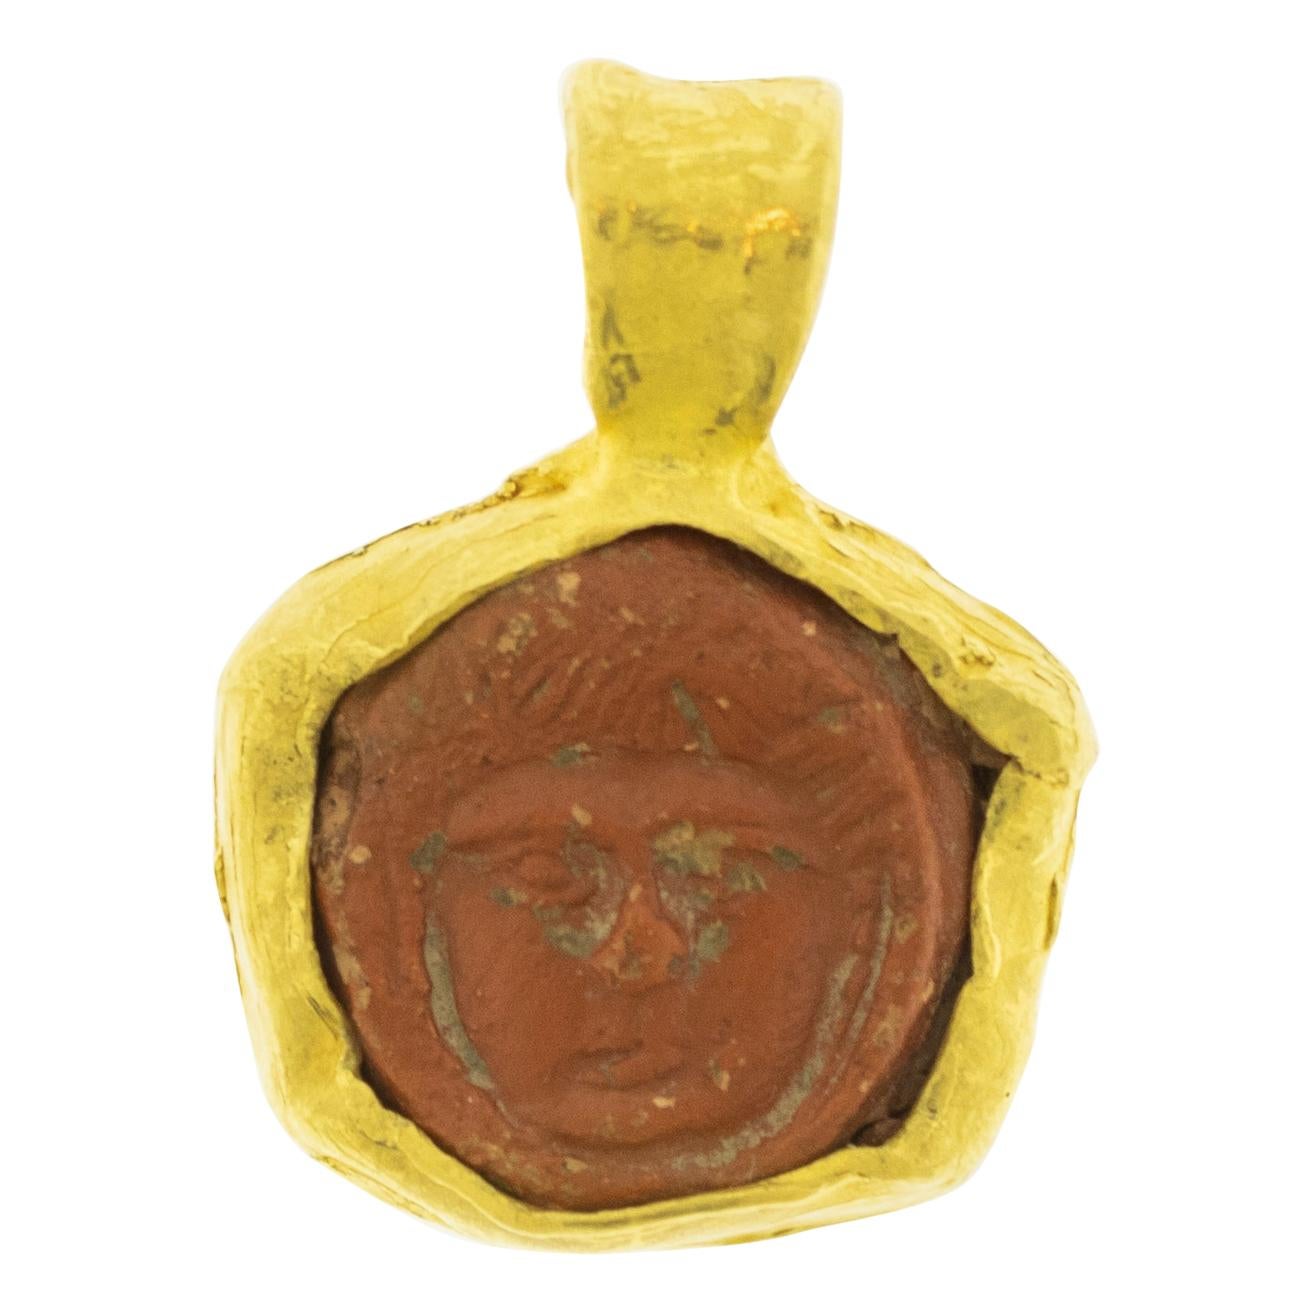 Ancient Clay Artifact Mounted in 22 Karat Gold Pendant